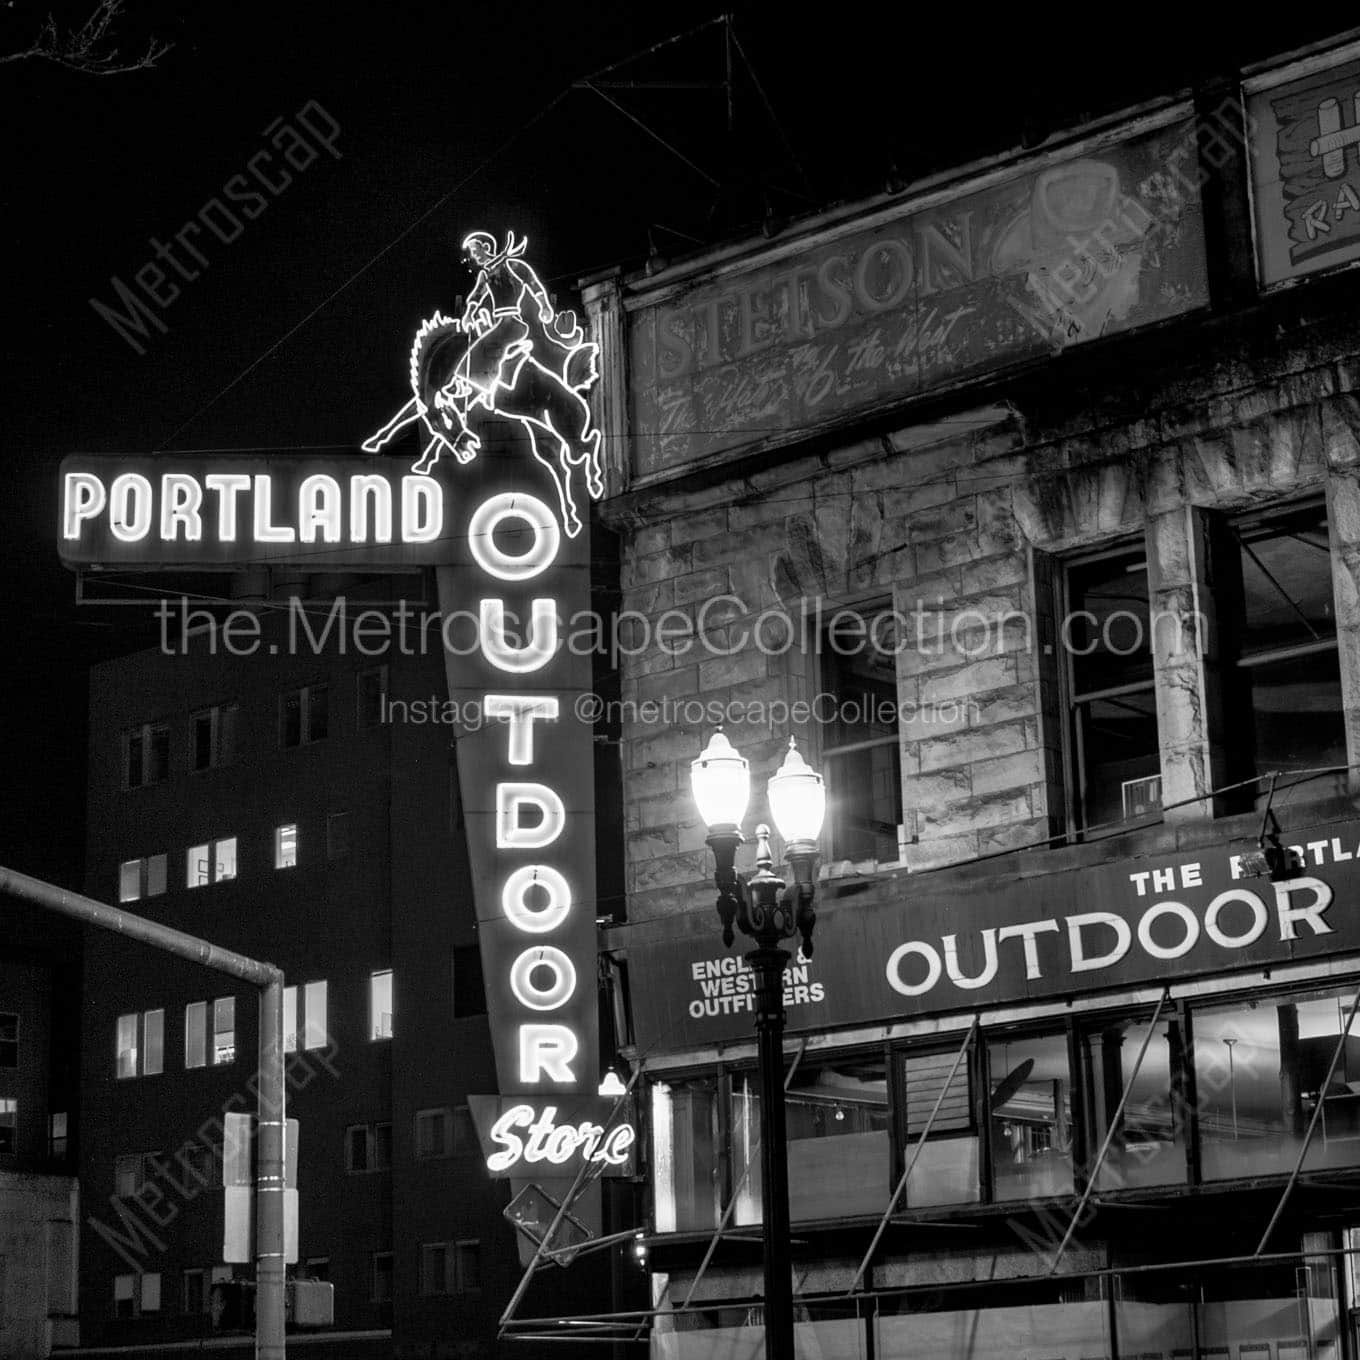 portland outdoor store neon sign Black & White Office Art